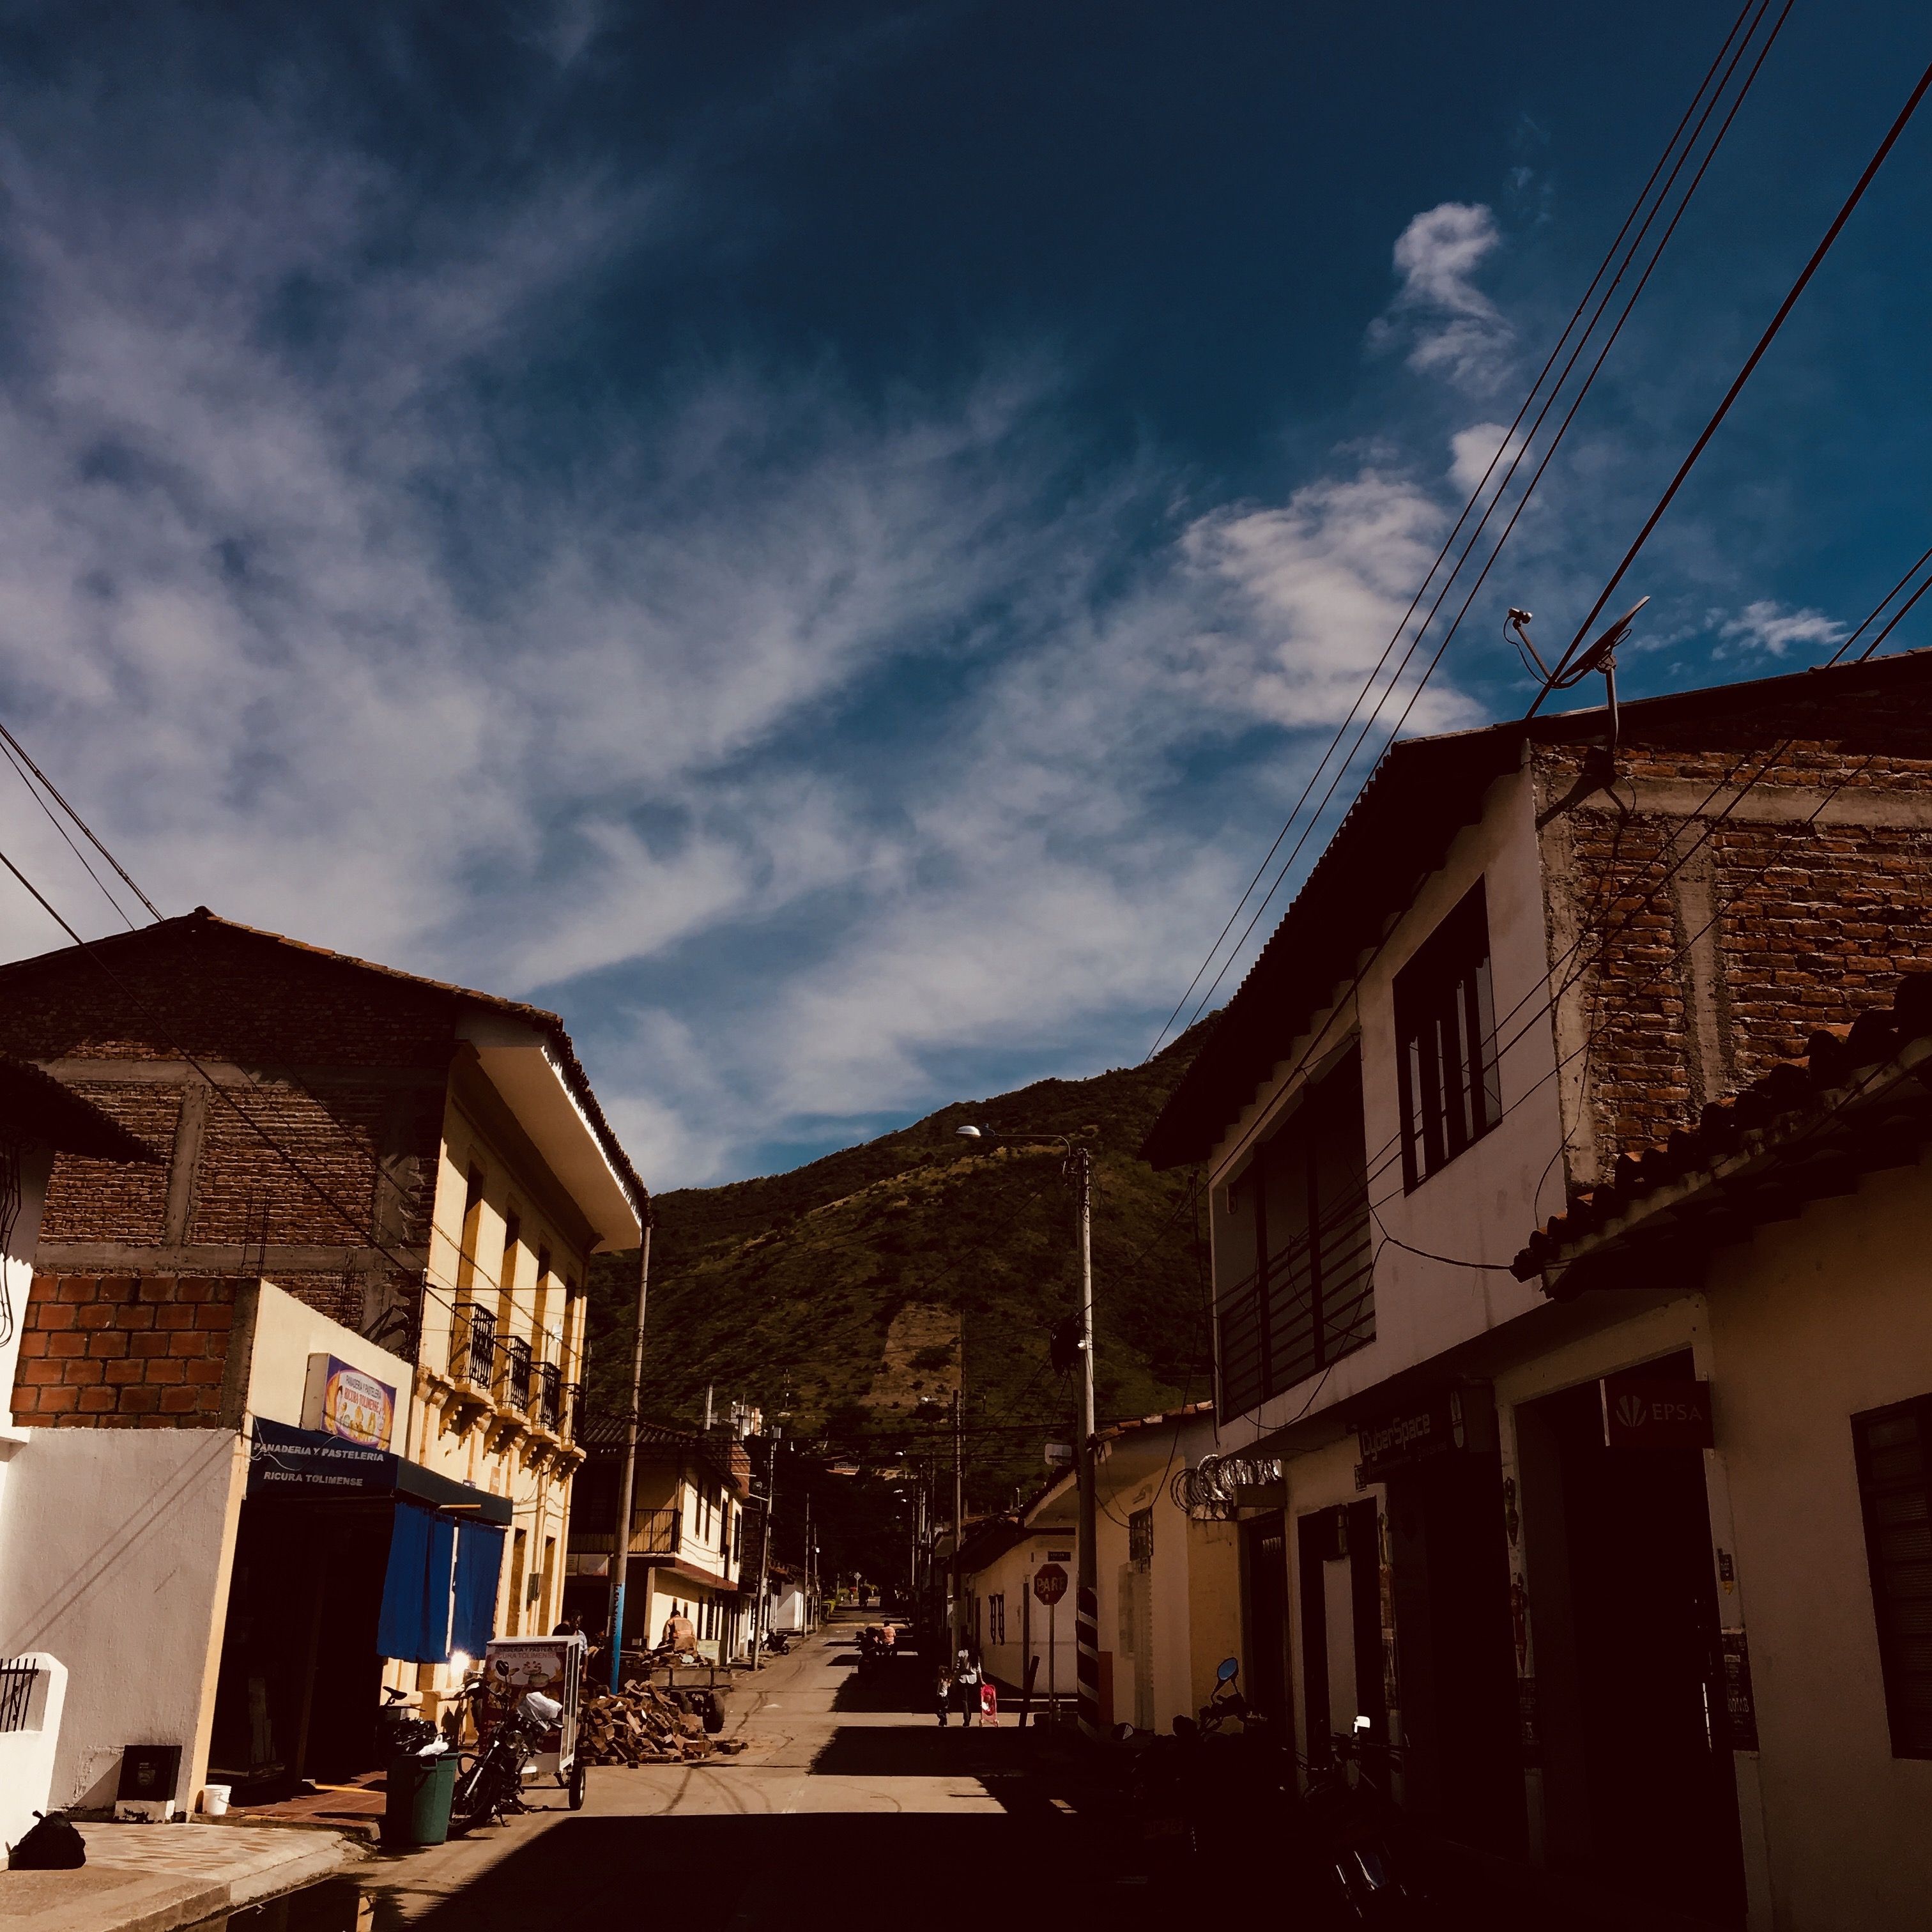 dany gregoire recommends Vijes Valle Del Cauca